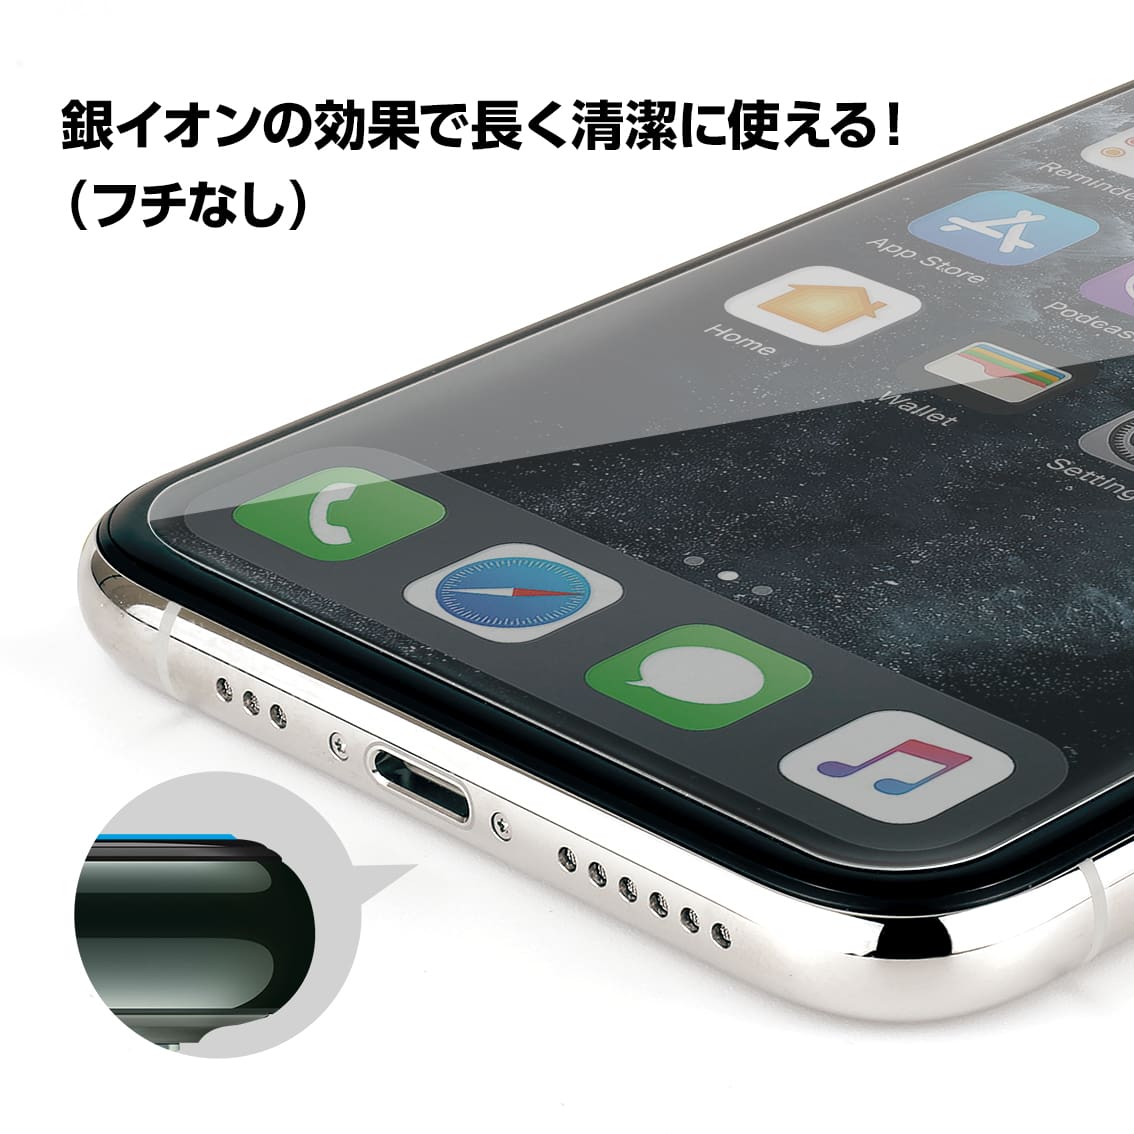 iPhone 11Pro / XS / X 強化ガラス 液晶保護フィルム 抗菌 耐衝撃 超薄 0.15mm